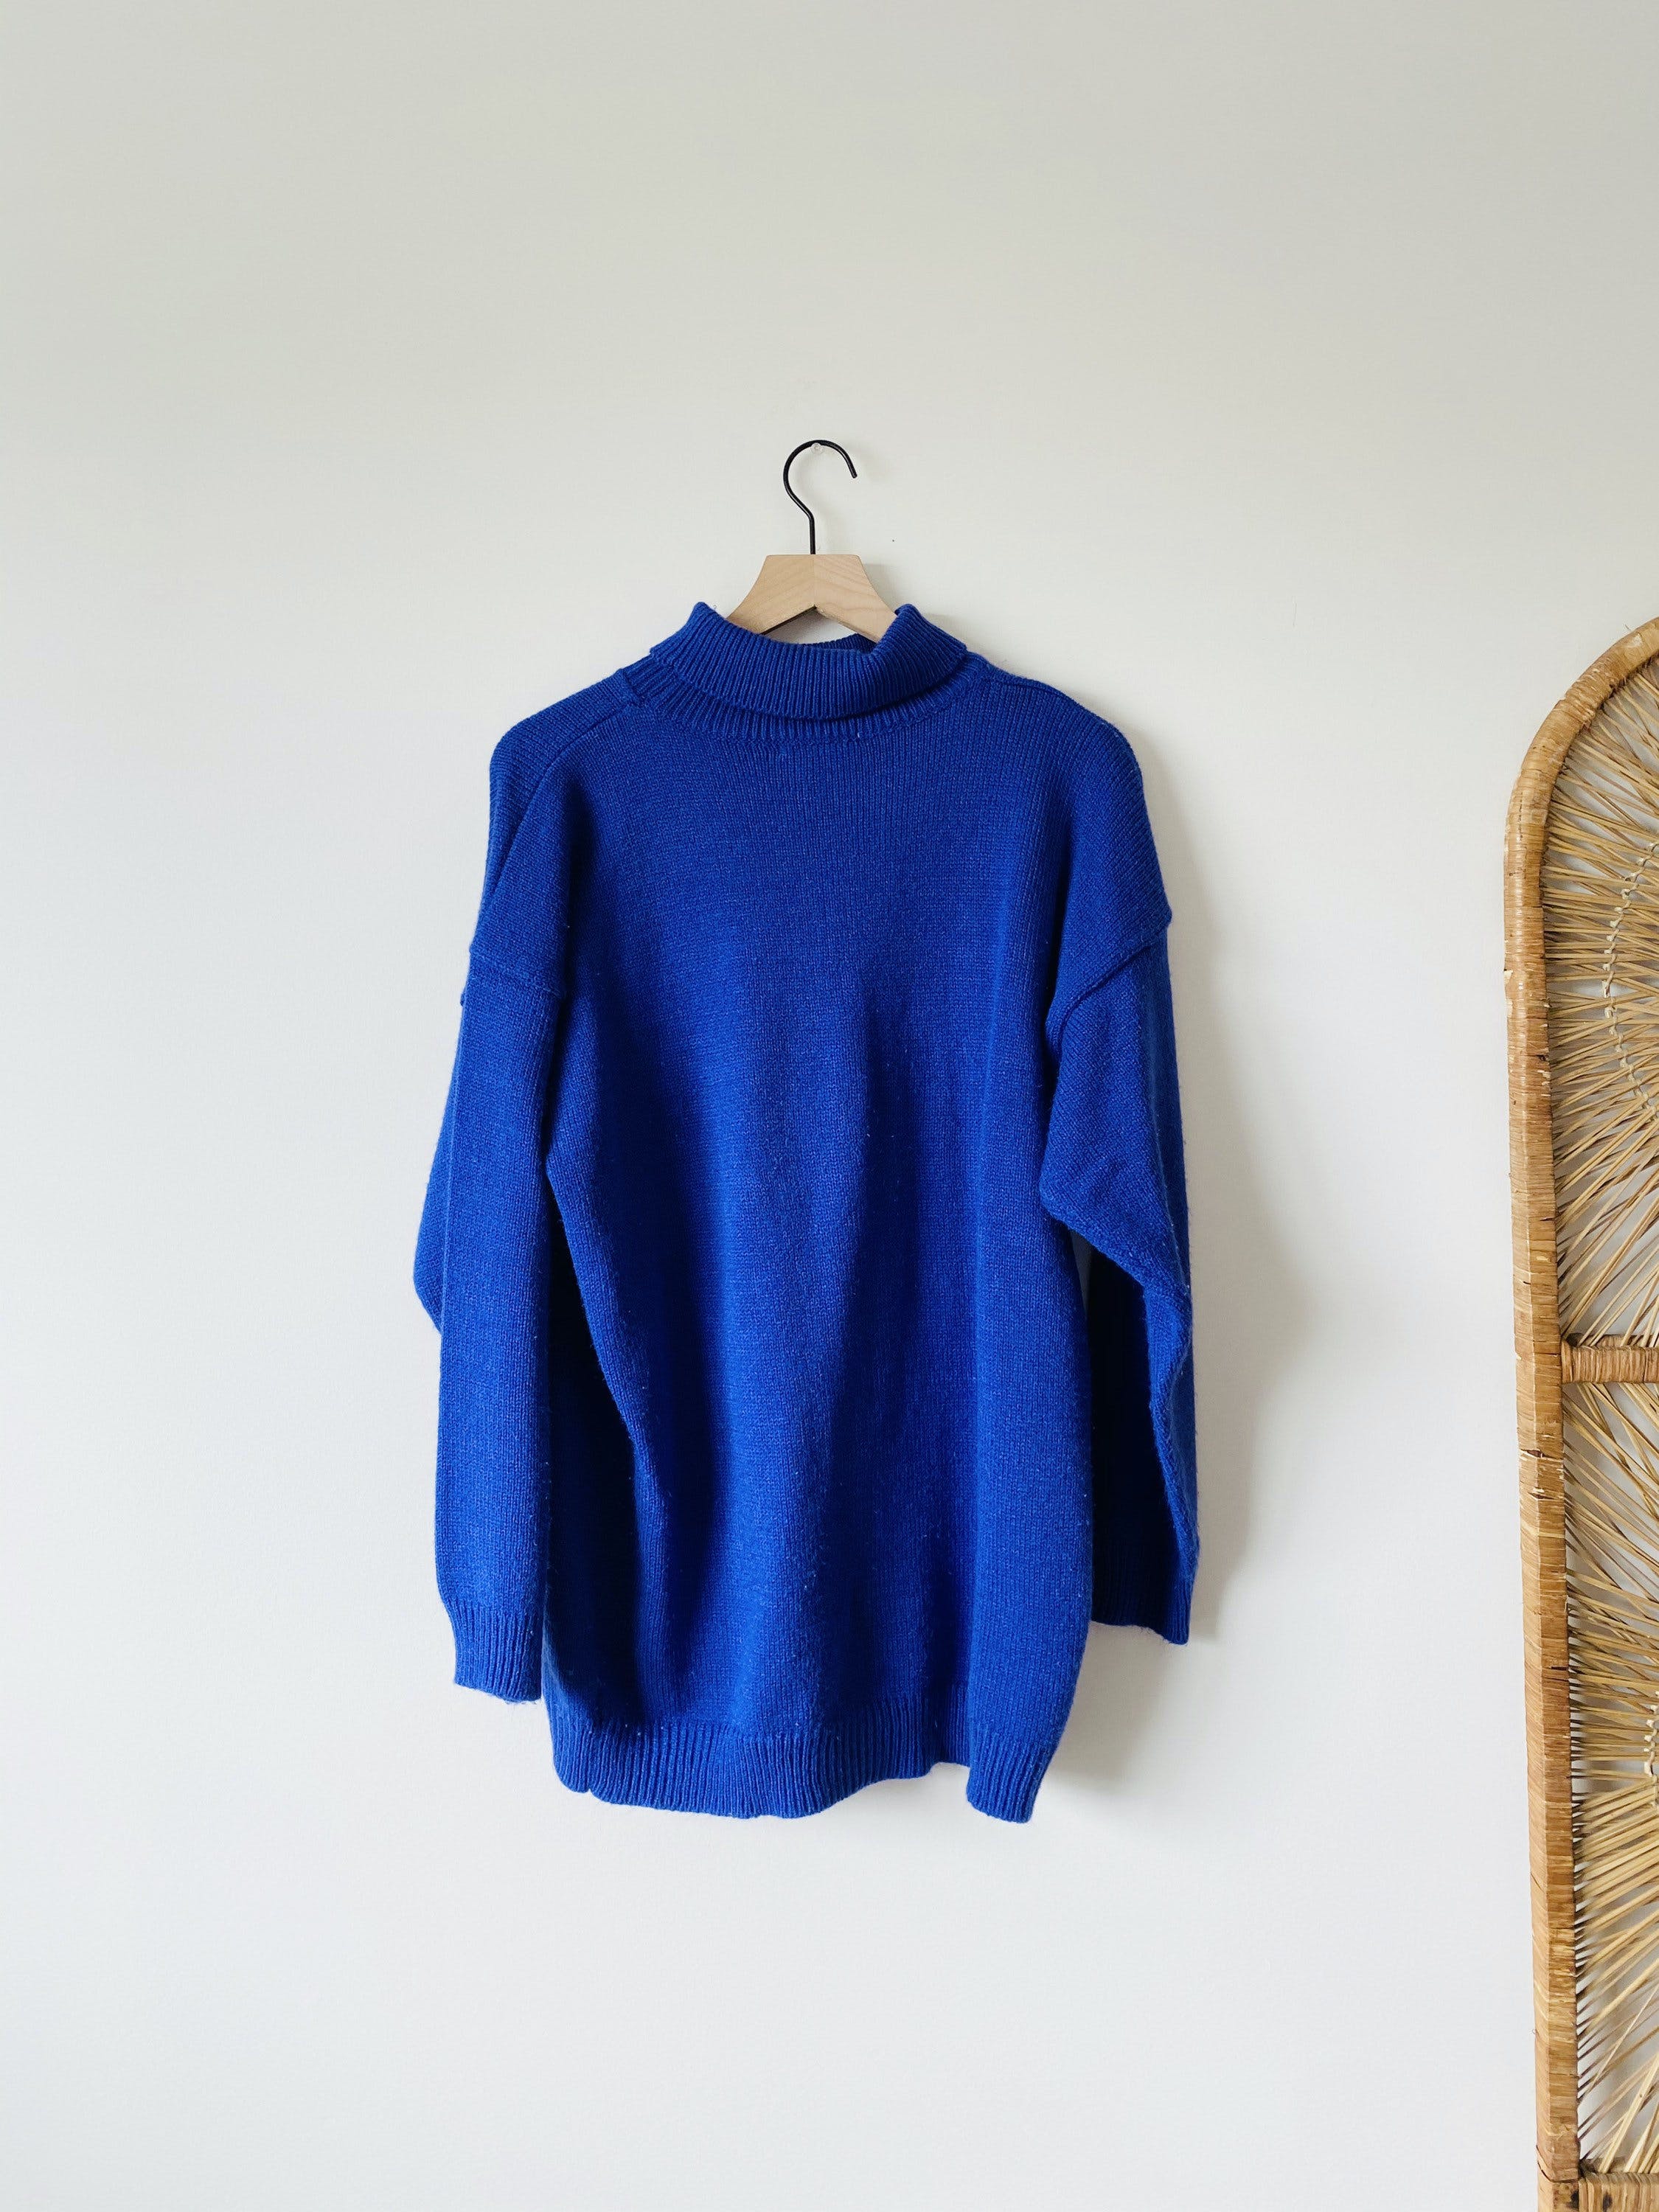 Vintage 90's Royal Purple Knit Turtleneck Sweater by One Step Up | Shop ...